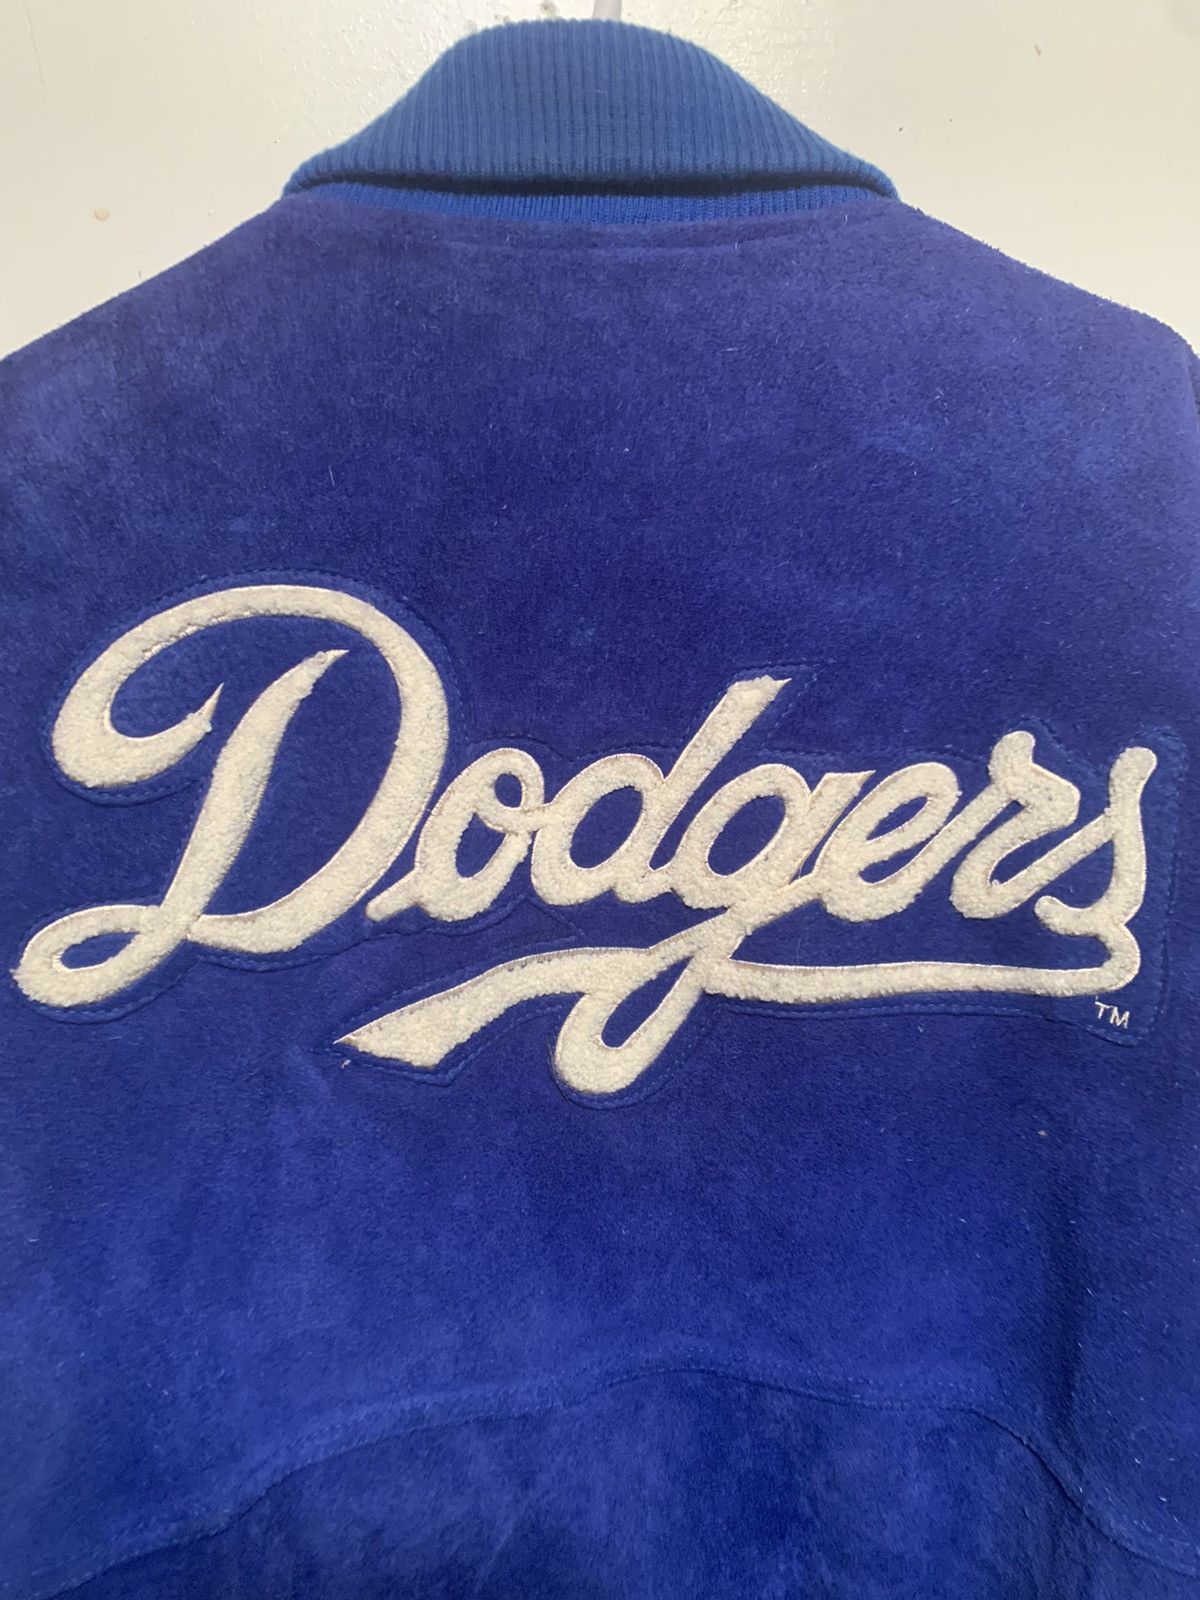 Los Angeles Dodgers Los Angeles Dodgers World champs 2020 Leather Suede Blue Size US XL / EU 56 / 4 - 6 Thumbnail